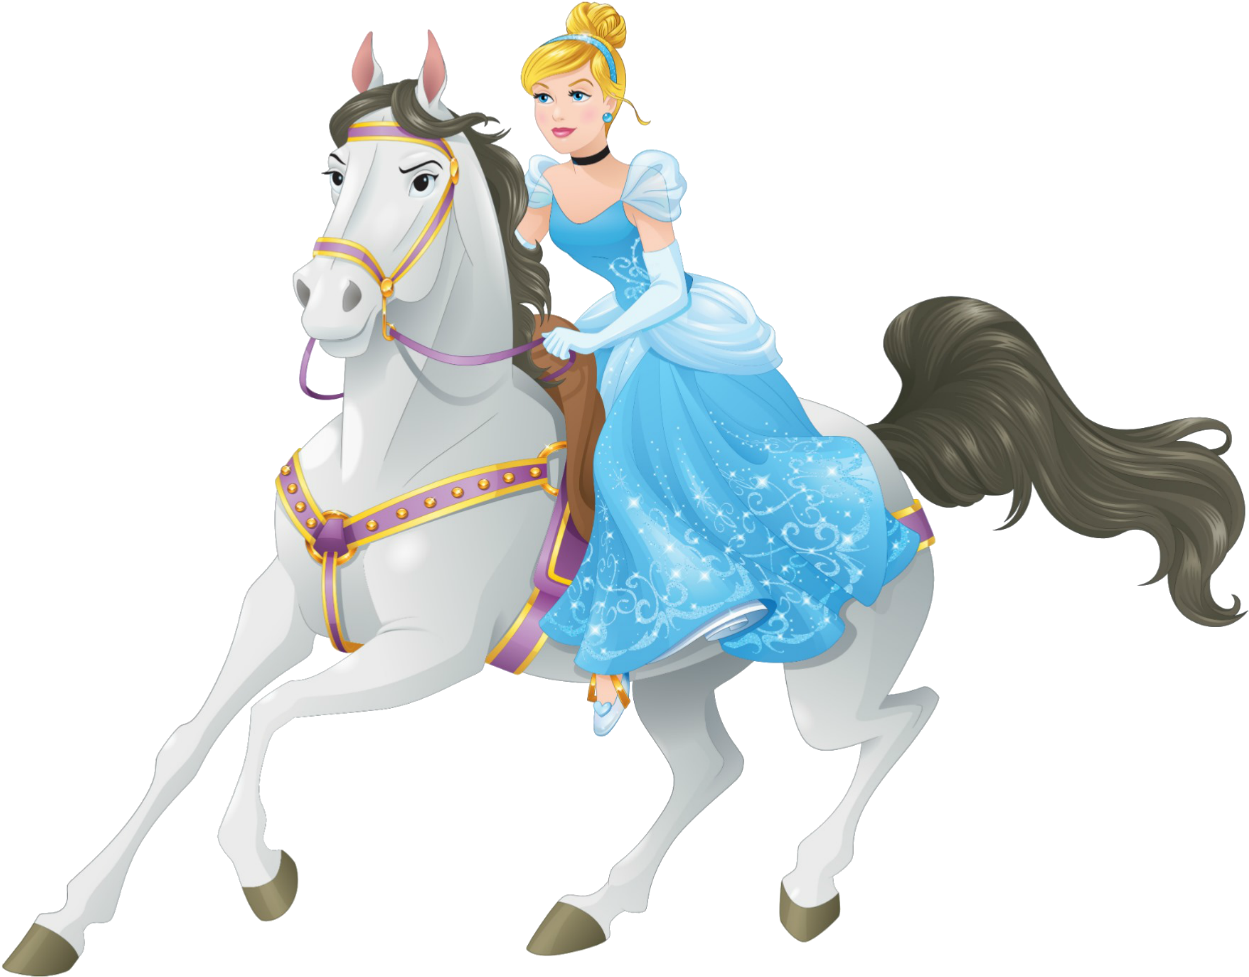 A Cartoon Of A Woman Riding A Horse